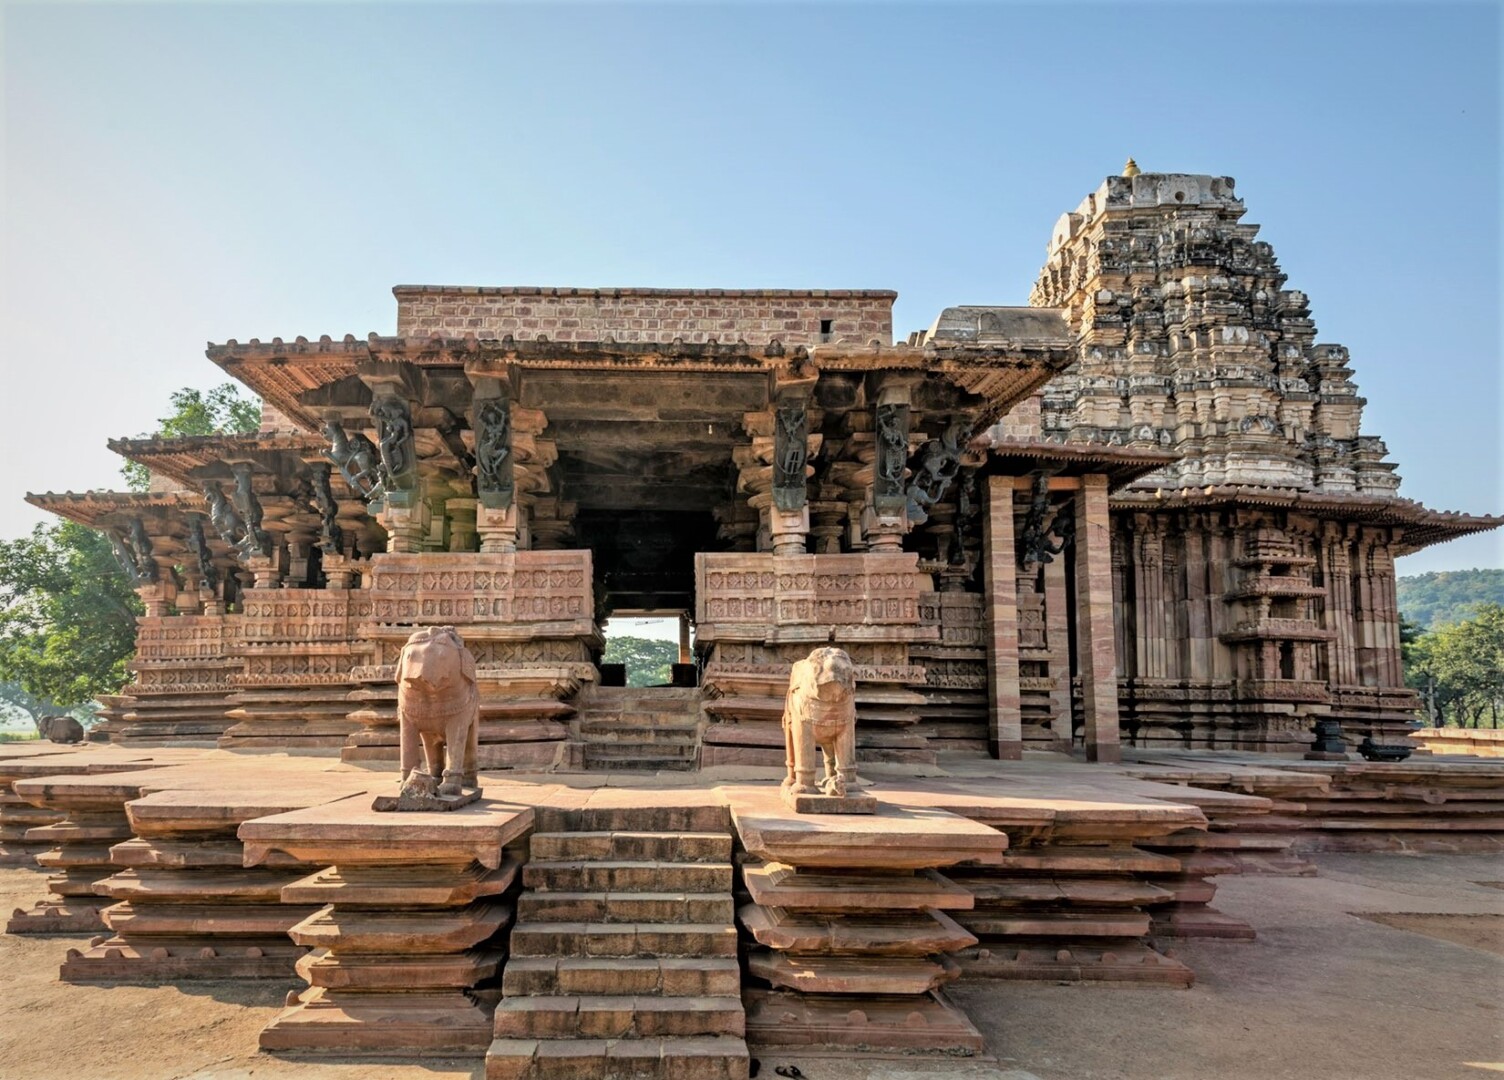 Enterance of Ramappa Temple